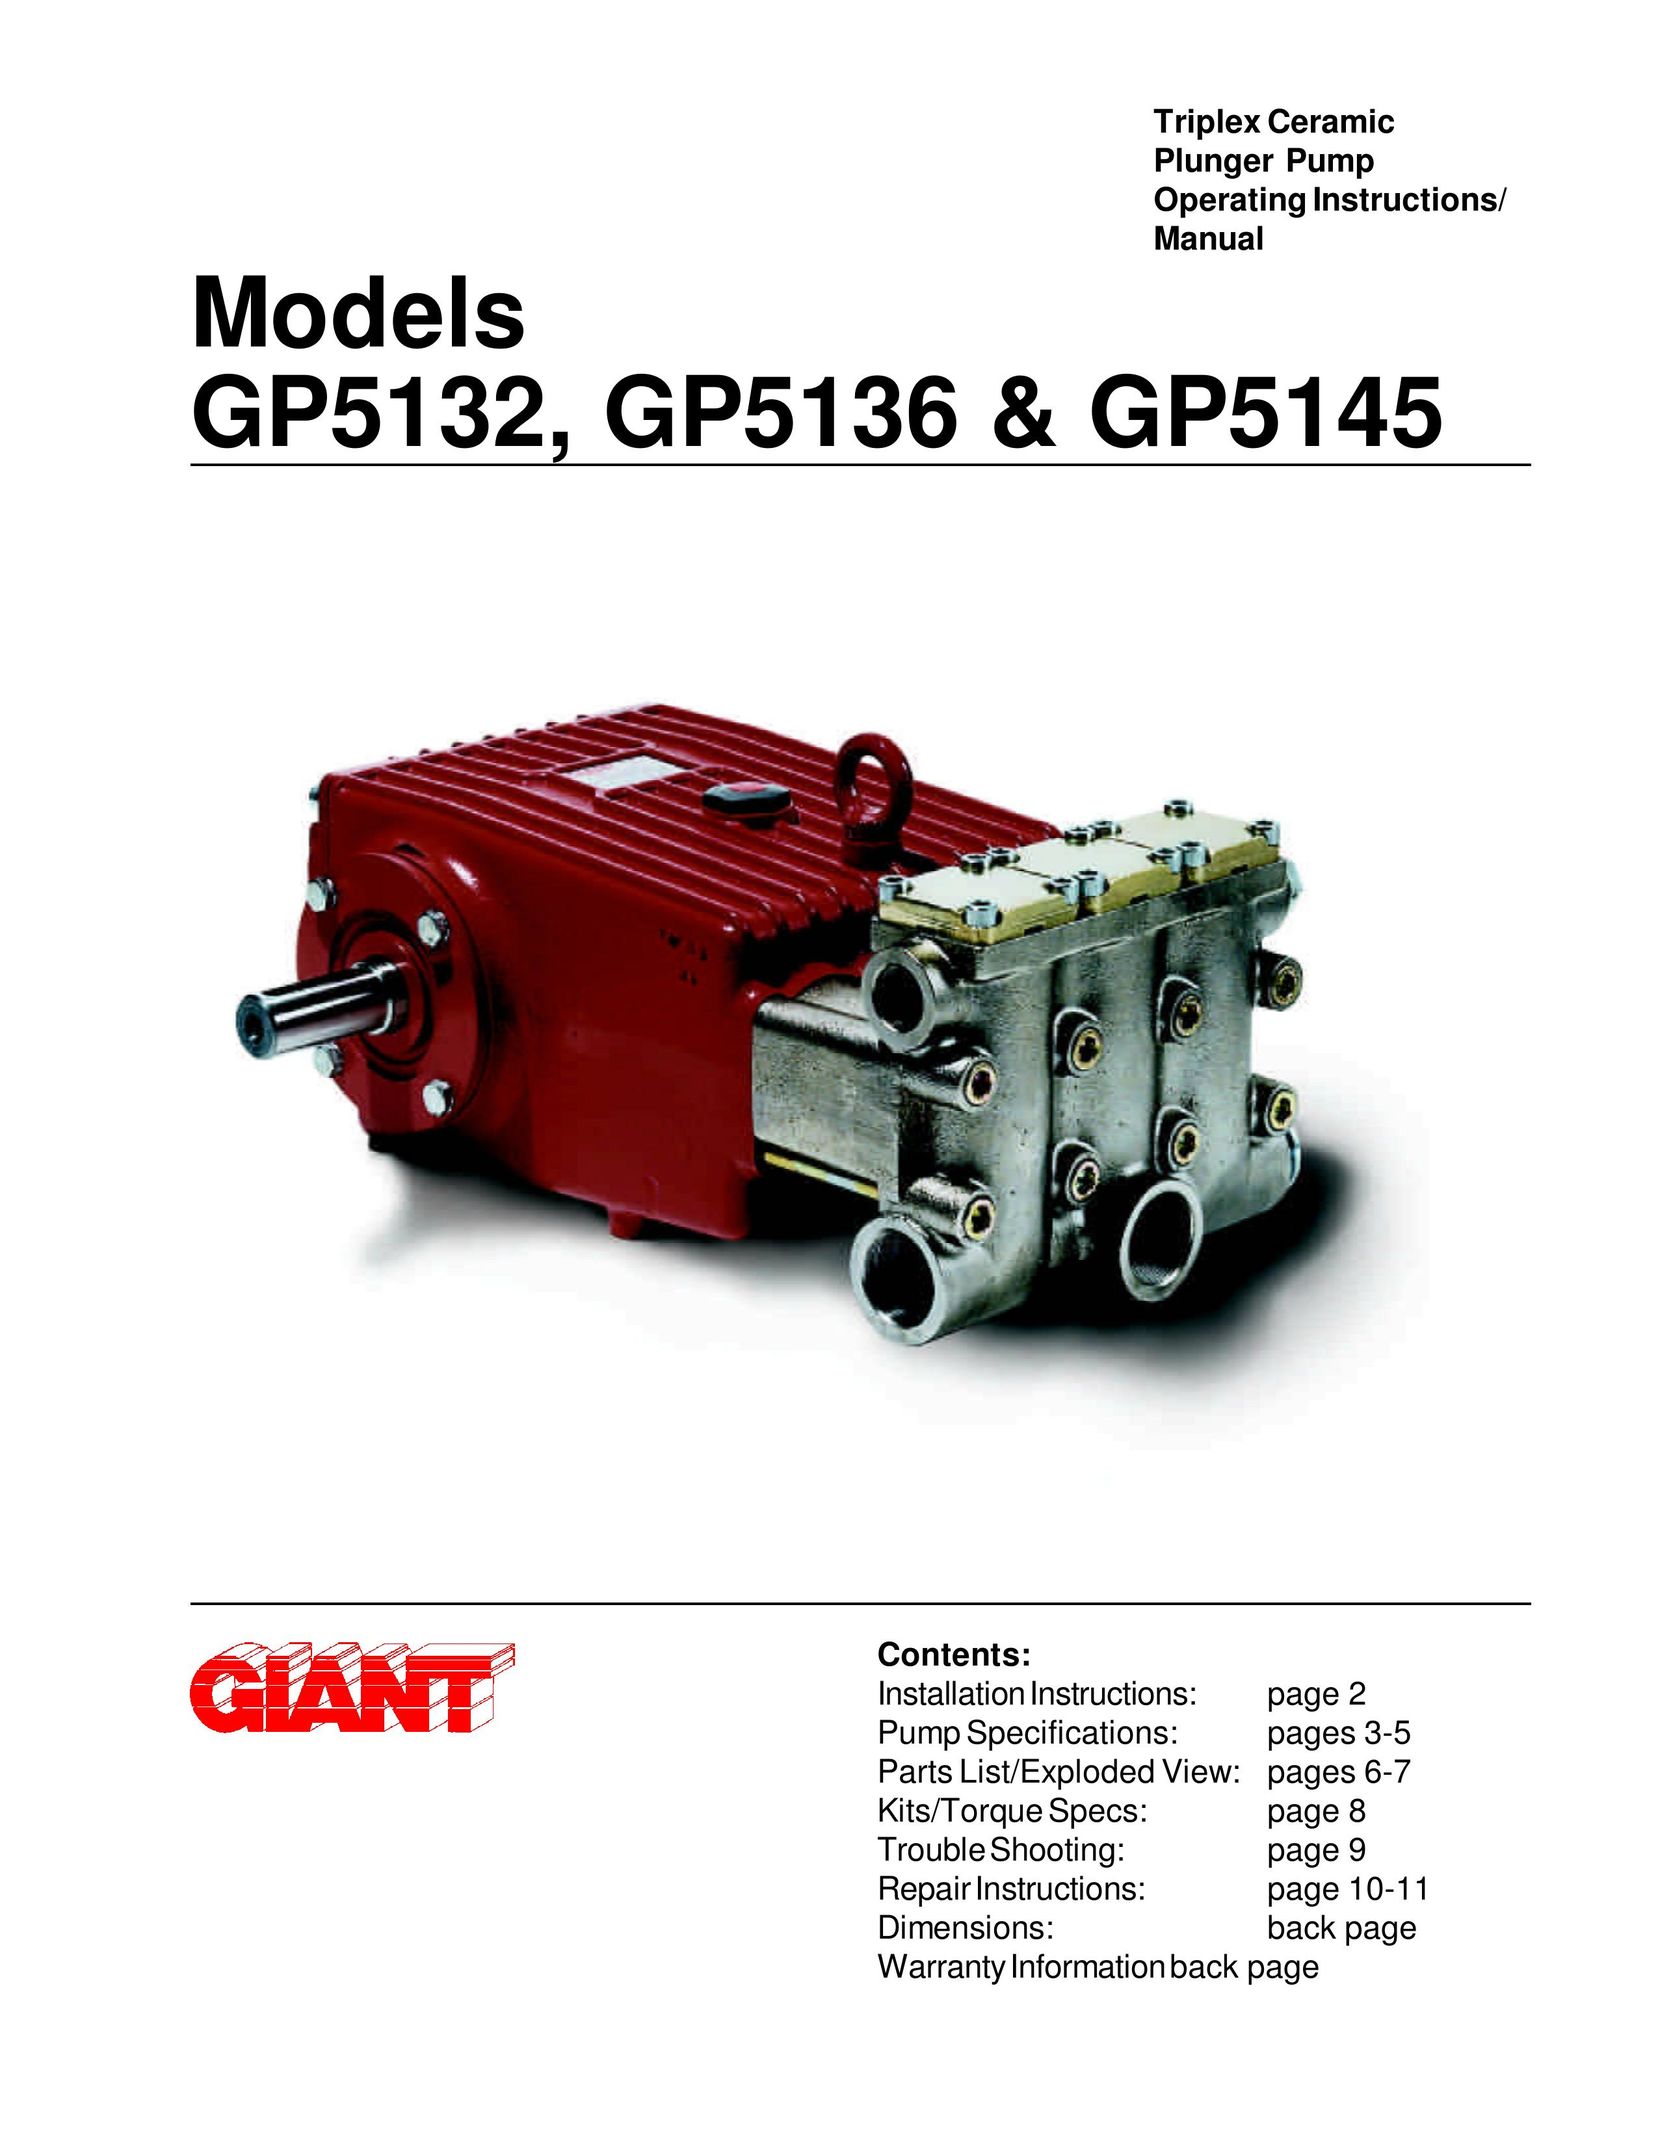 Giant GP5132 Heat Pump User Manual